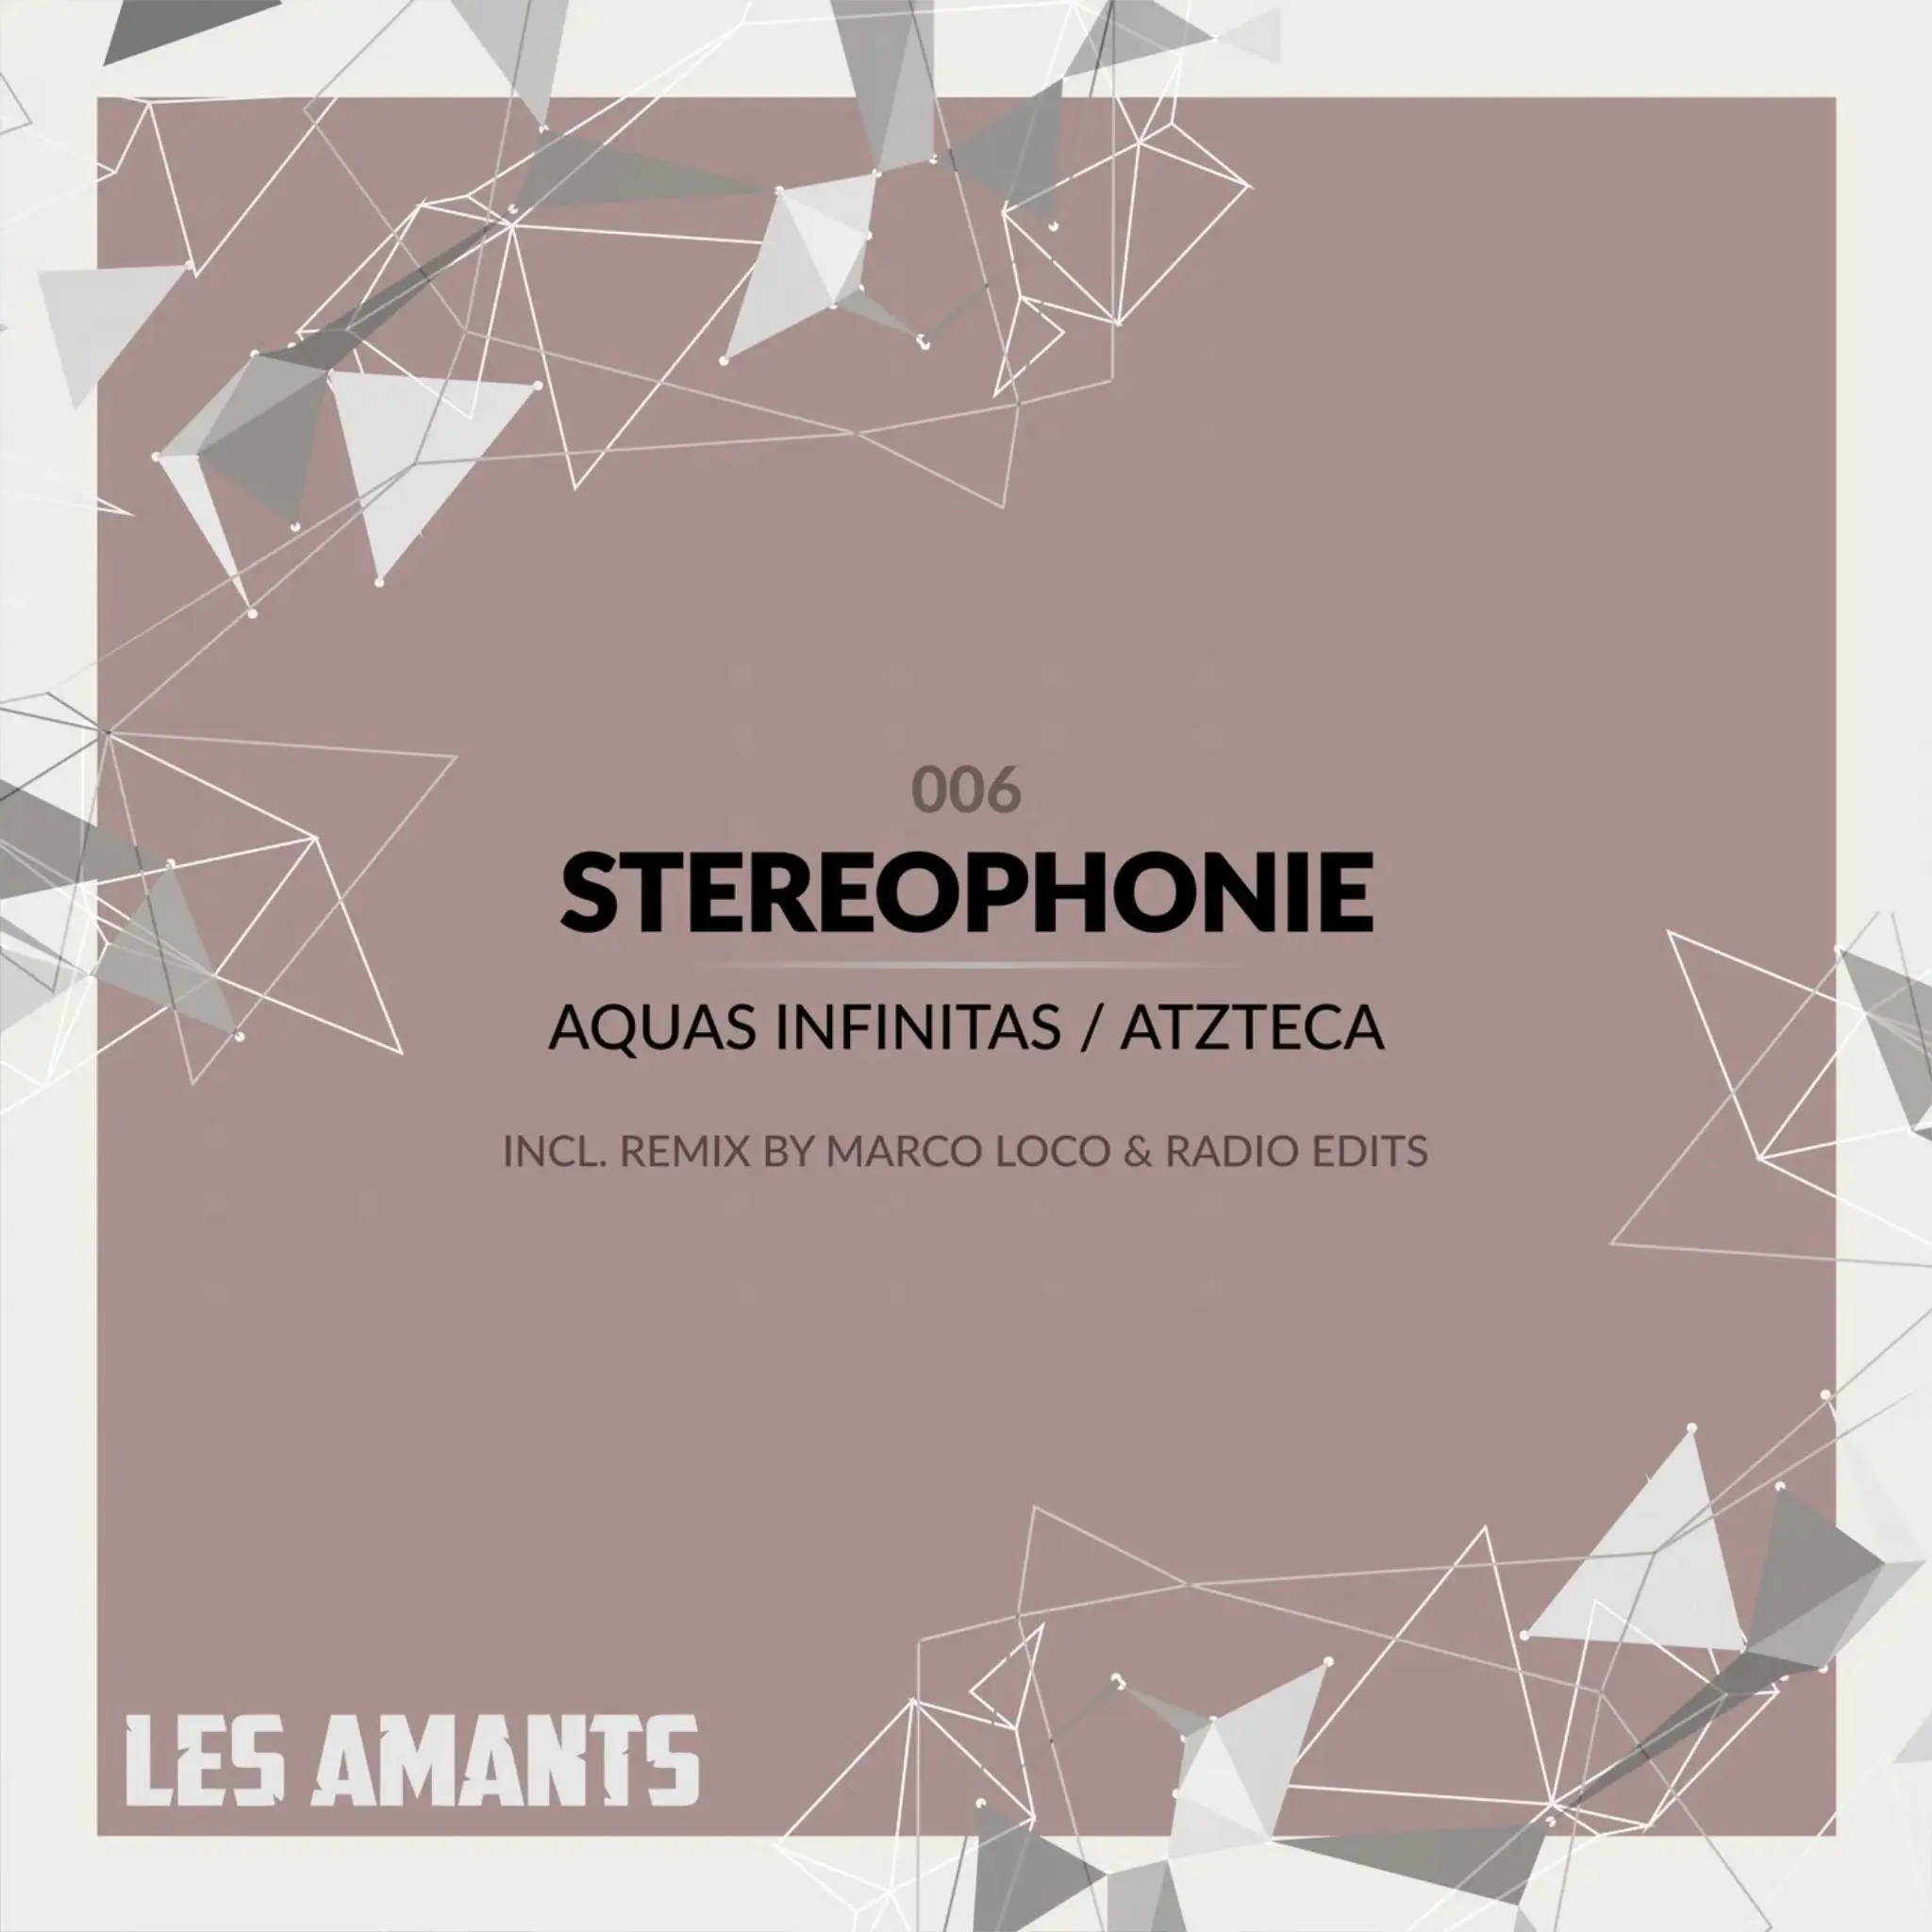 Stereophonie - Aquas Infinitas / Atzteca